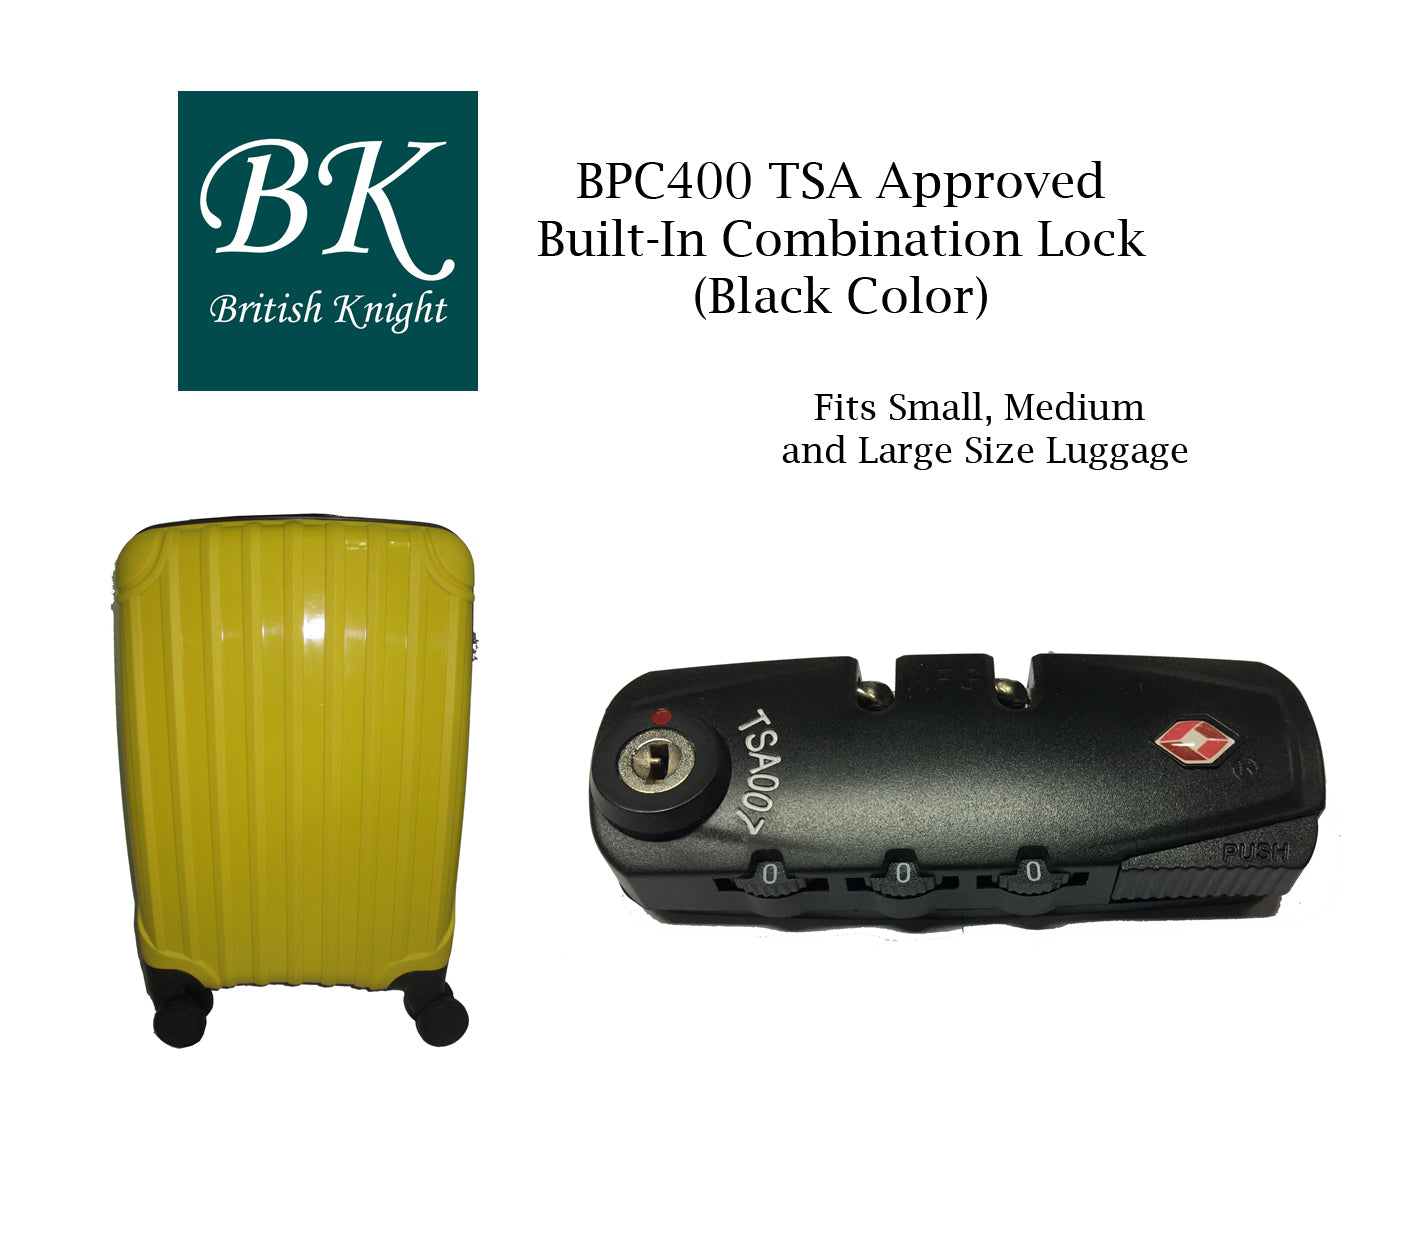 BPC400 TSA Approved Built-In Combination Lock